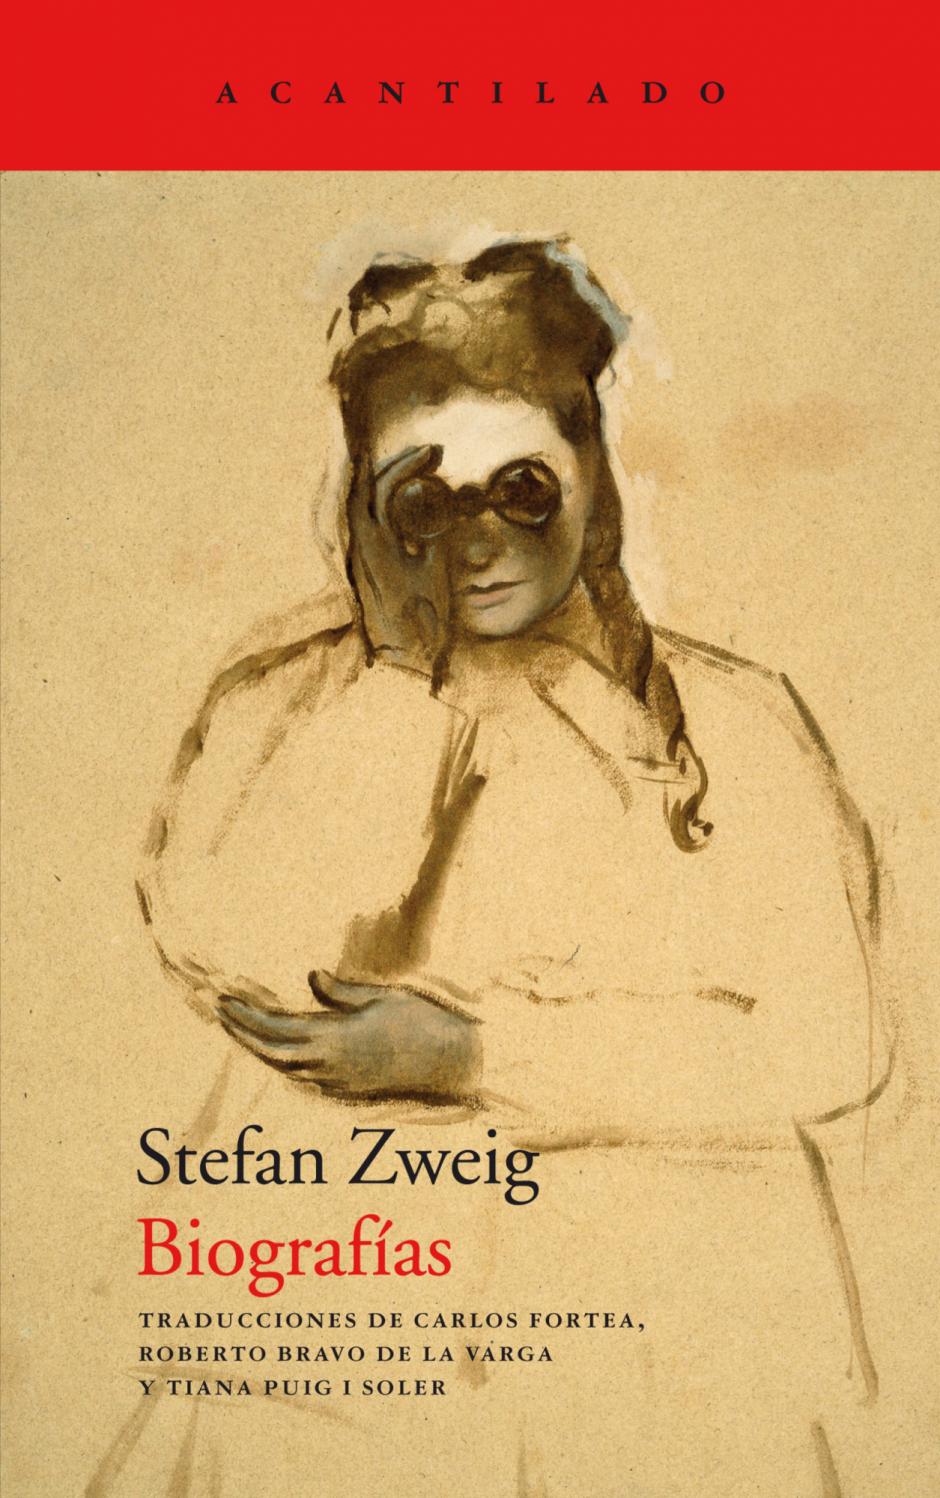 Portada de las «Biografías de Zweig», editadas por Acantilado